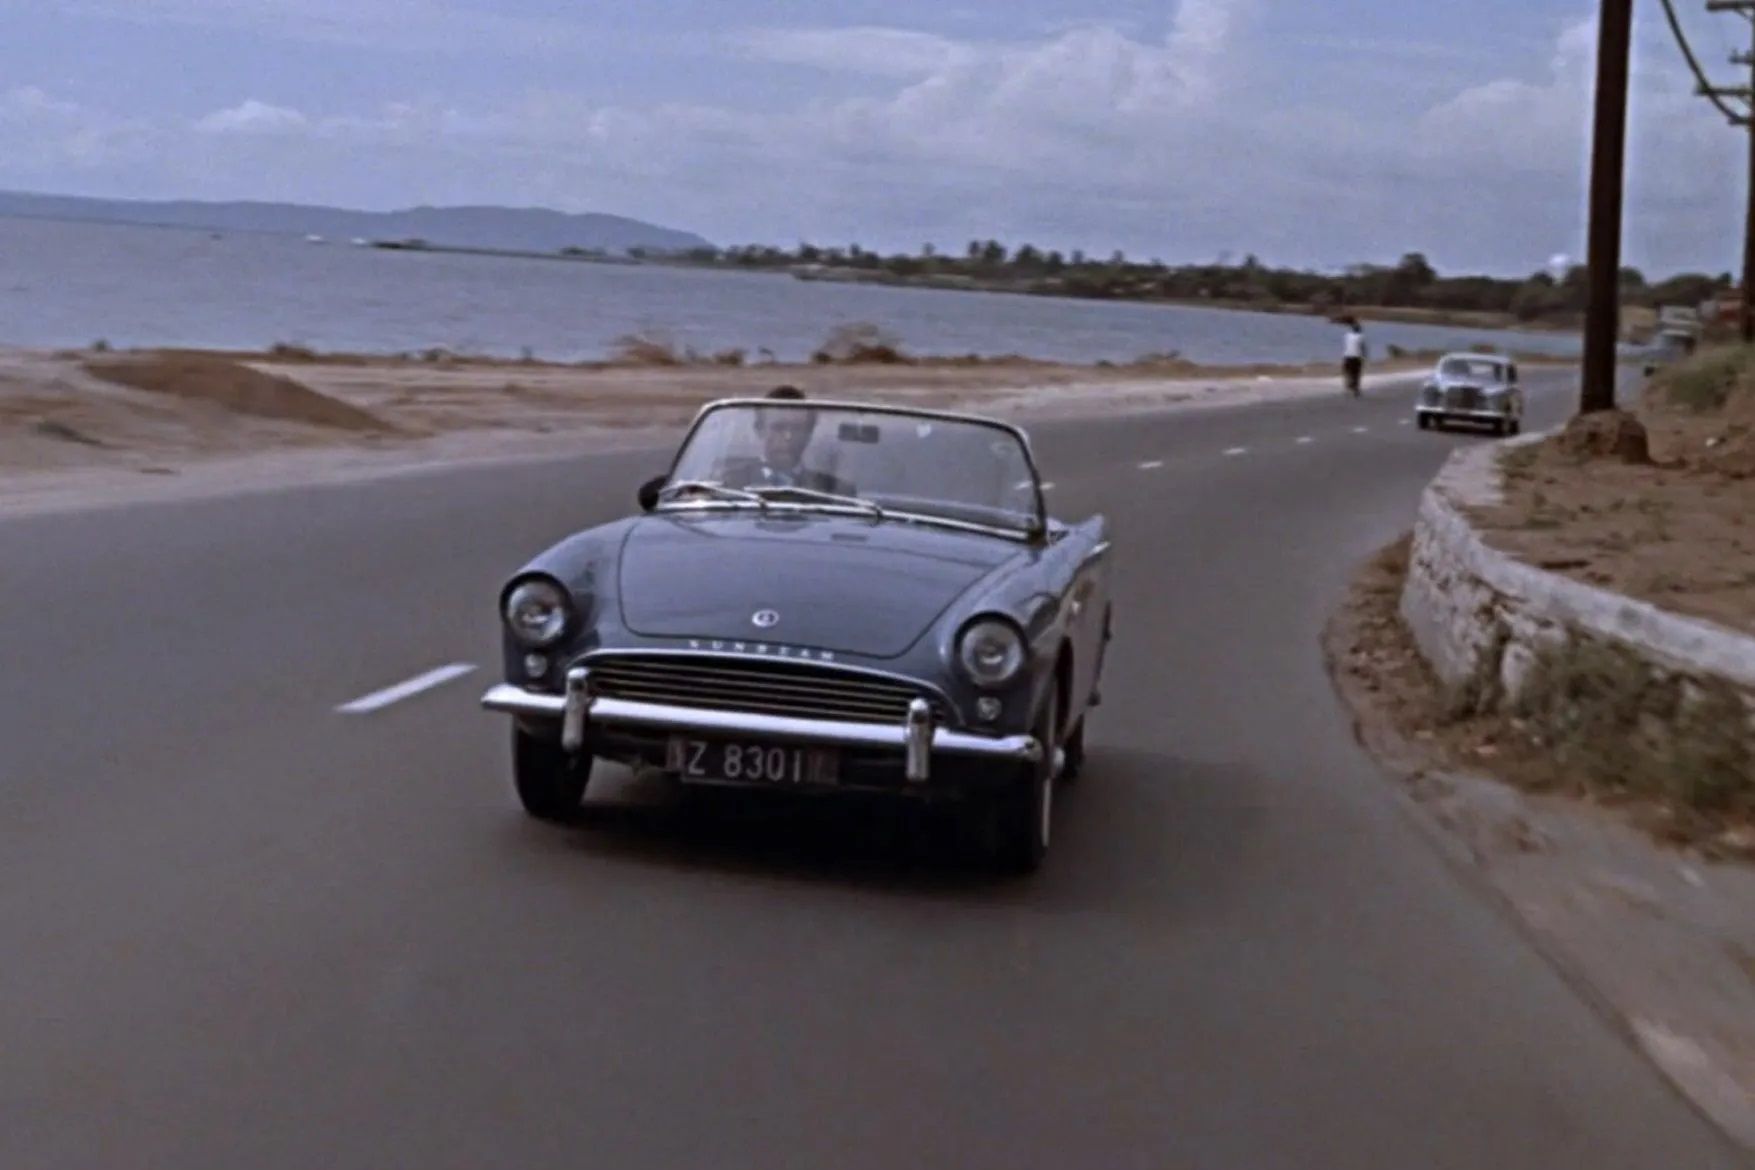 Bond's Sunbeam Alpine on the road